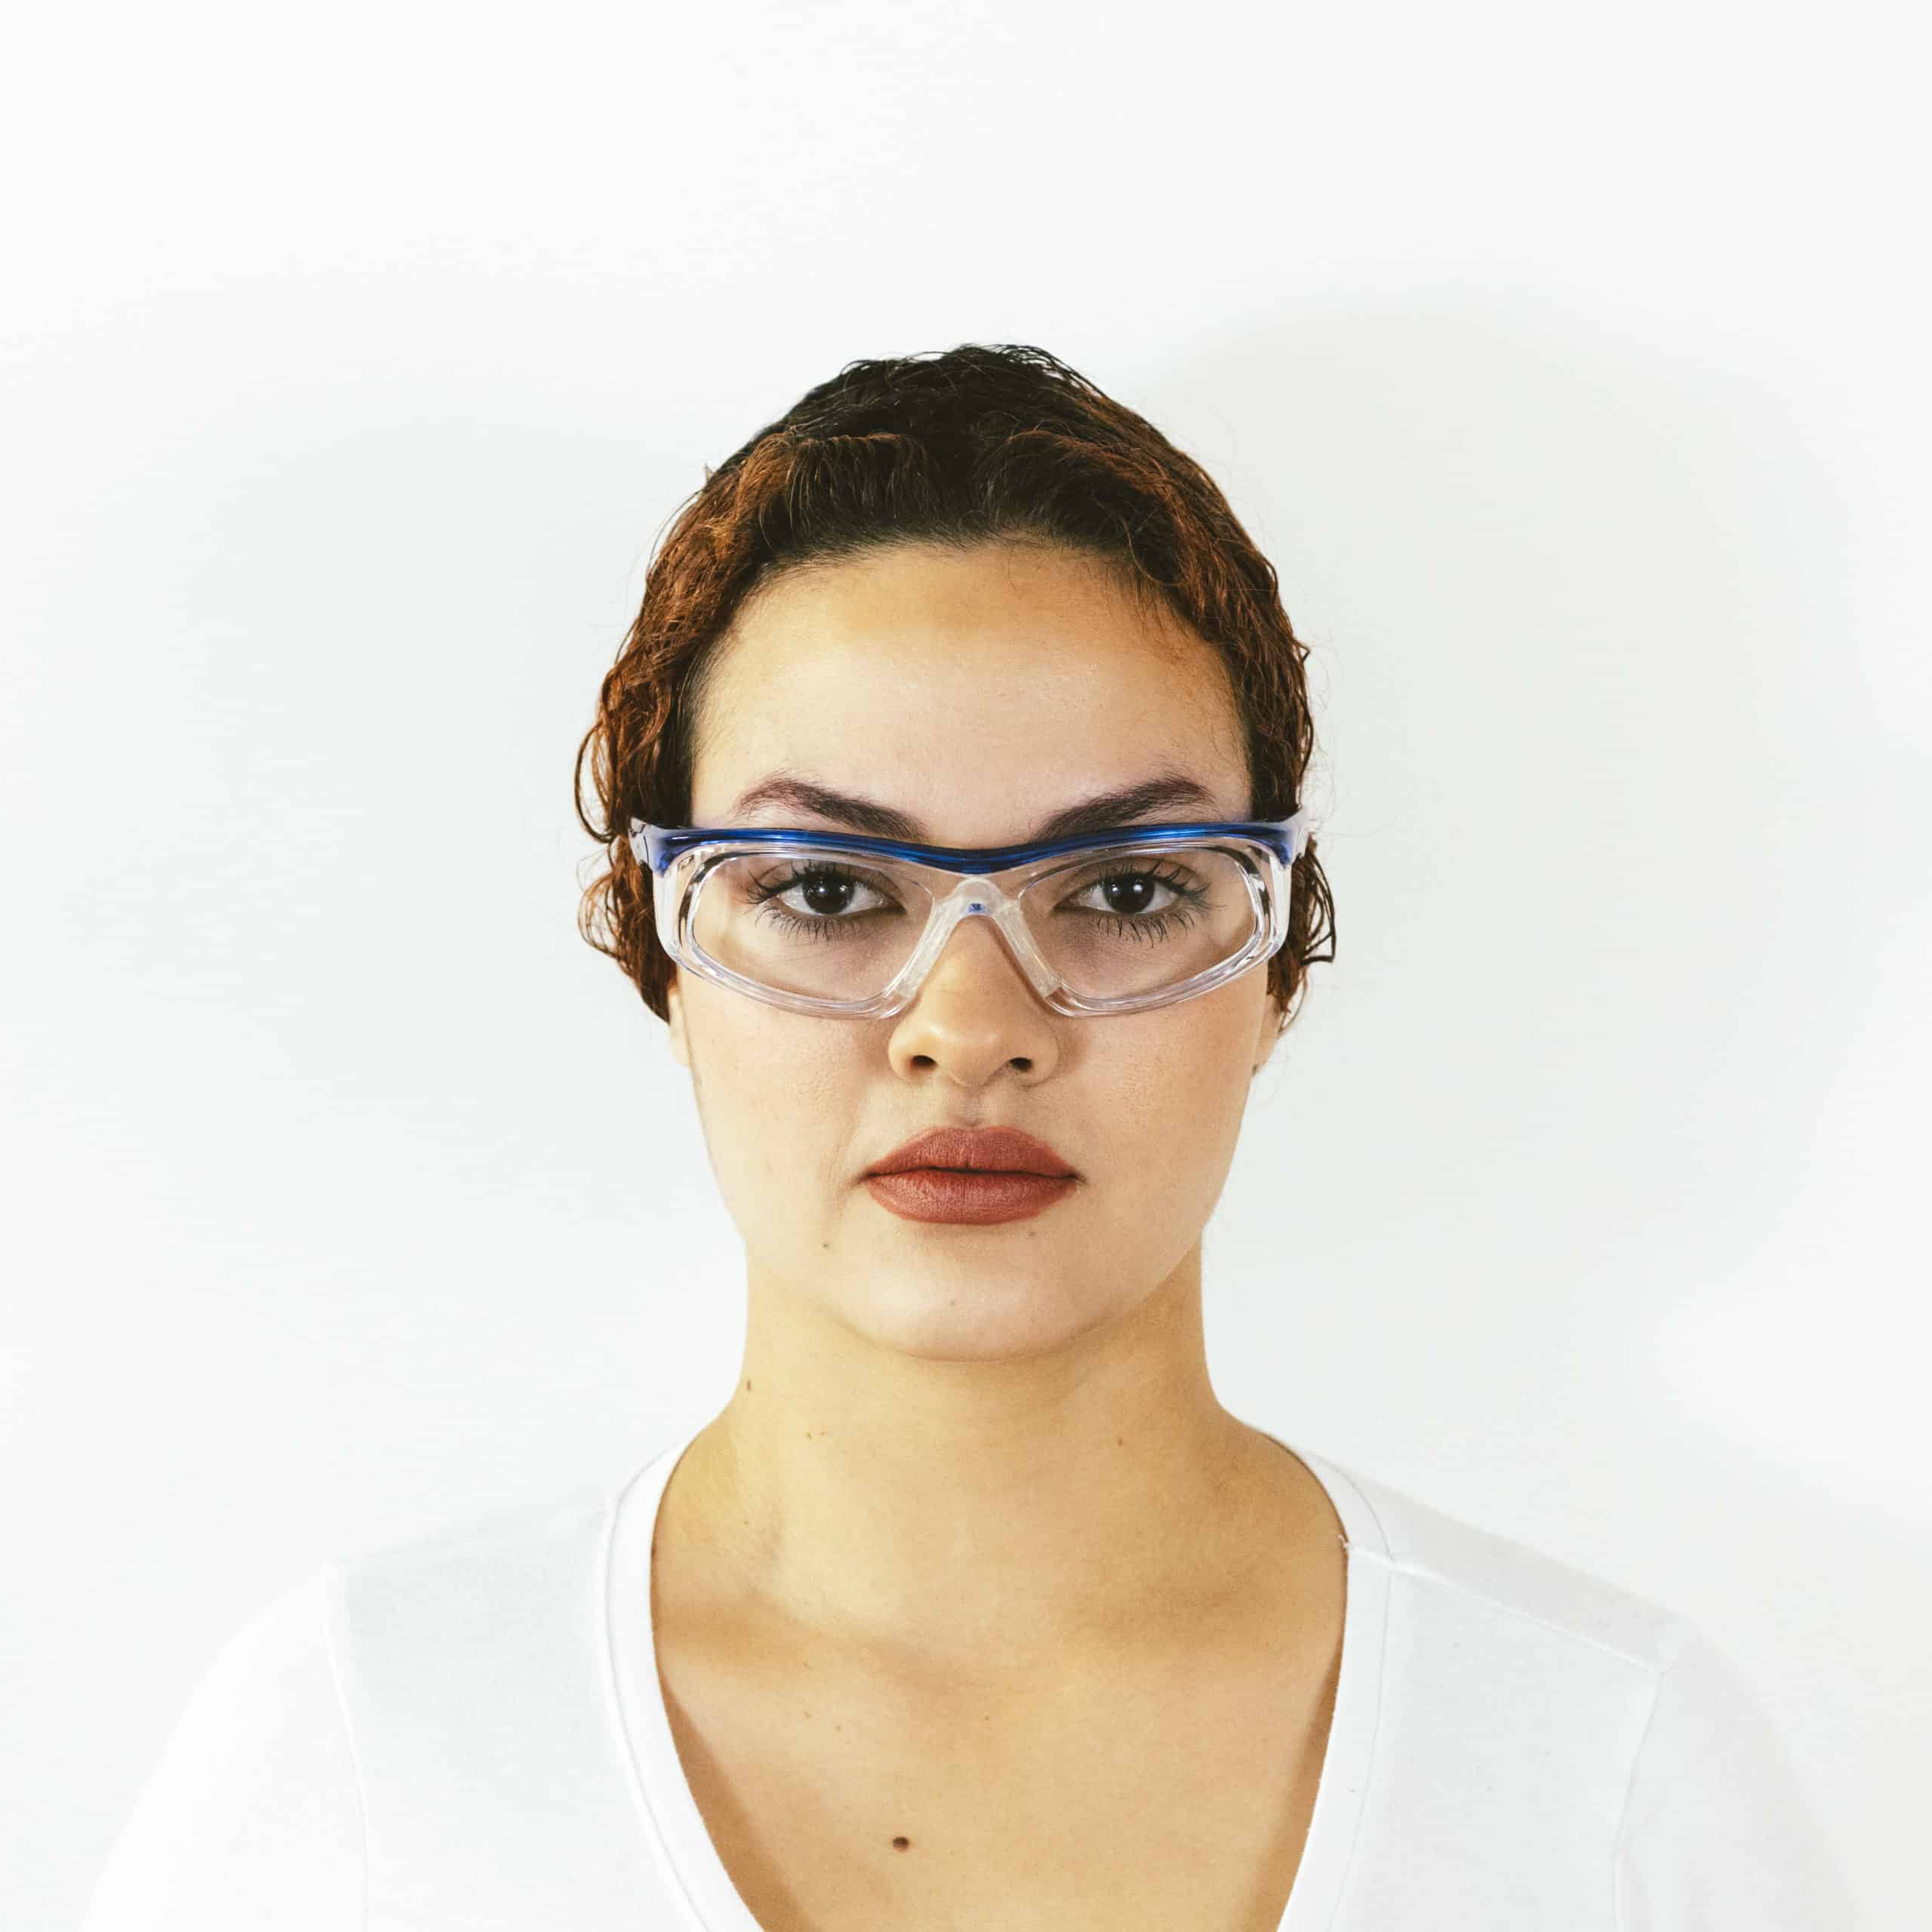  ANSI Rated Prescription Safety Glasses - SafetyGearPro.com - #1 .